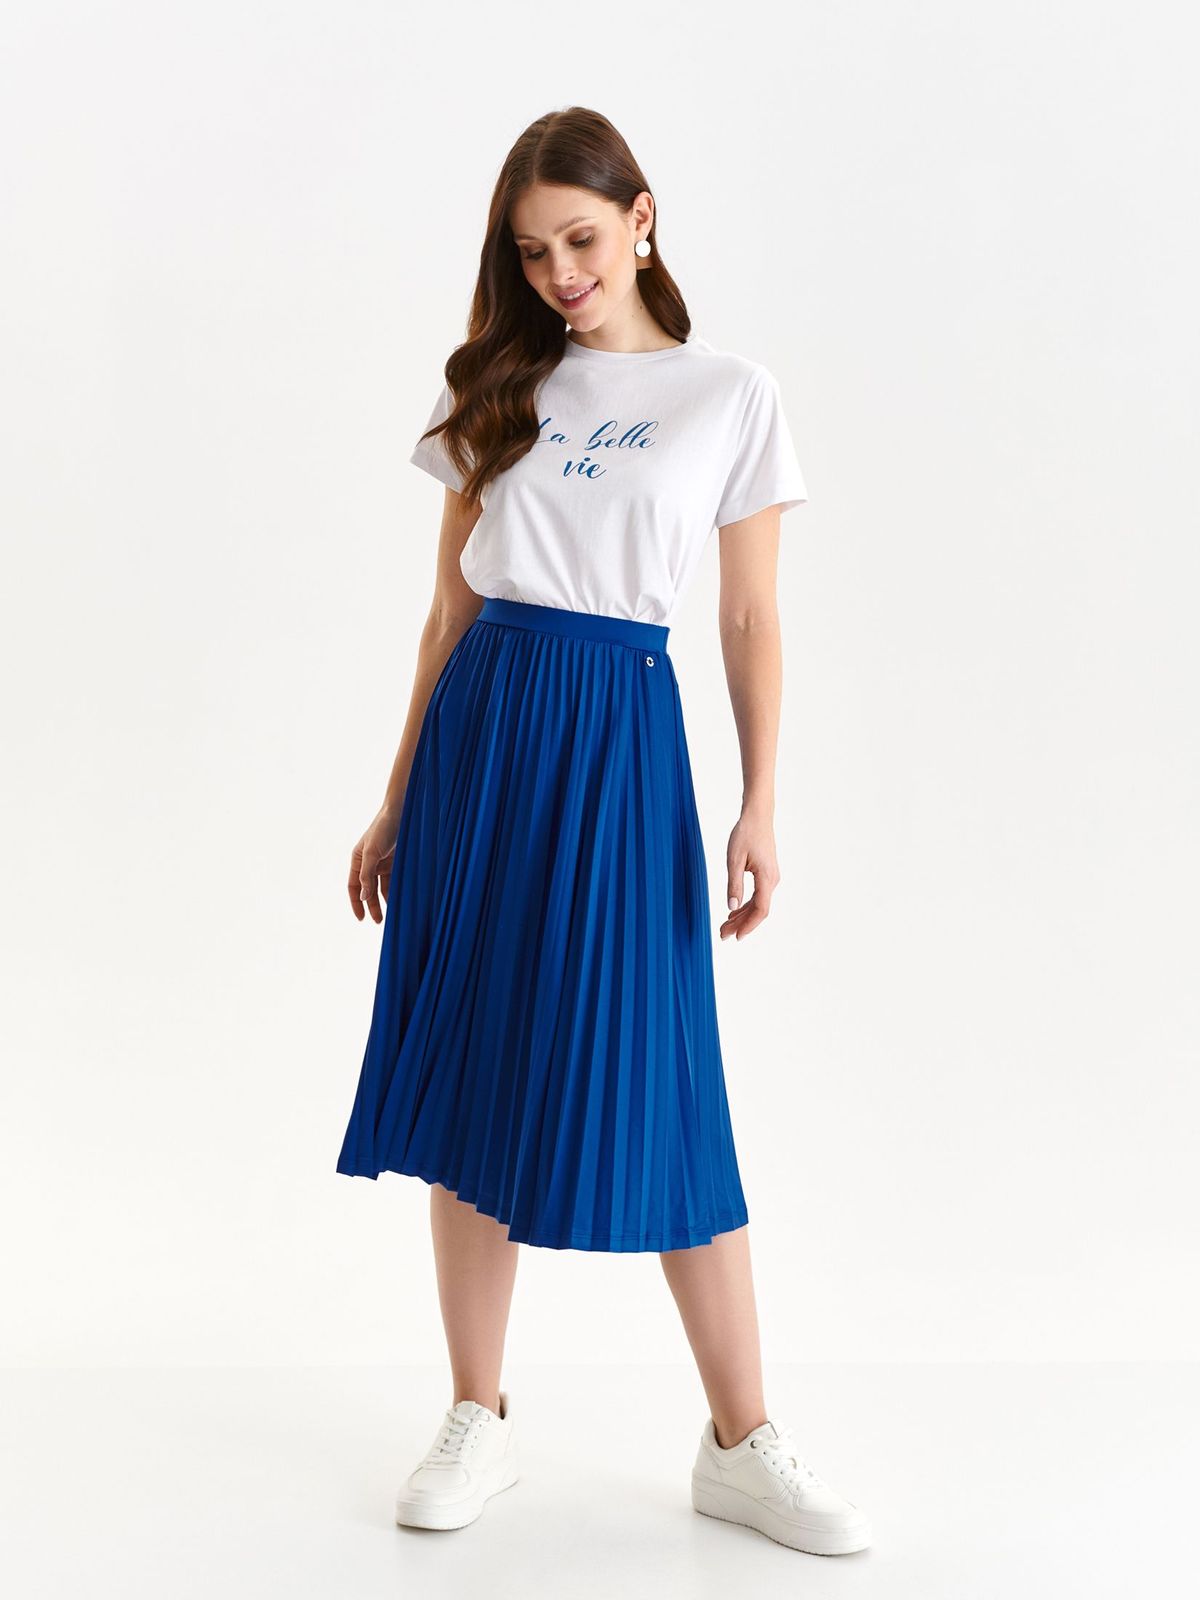 Blue skirt thin fabric midi pleated cloche with elastic waist